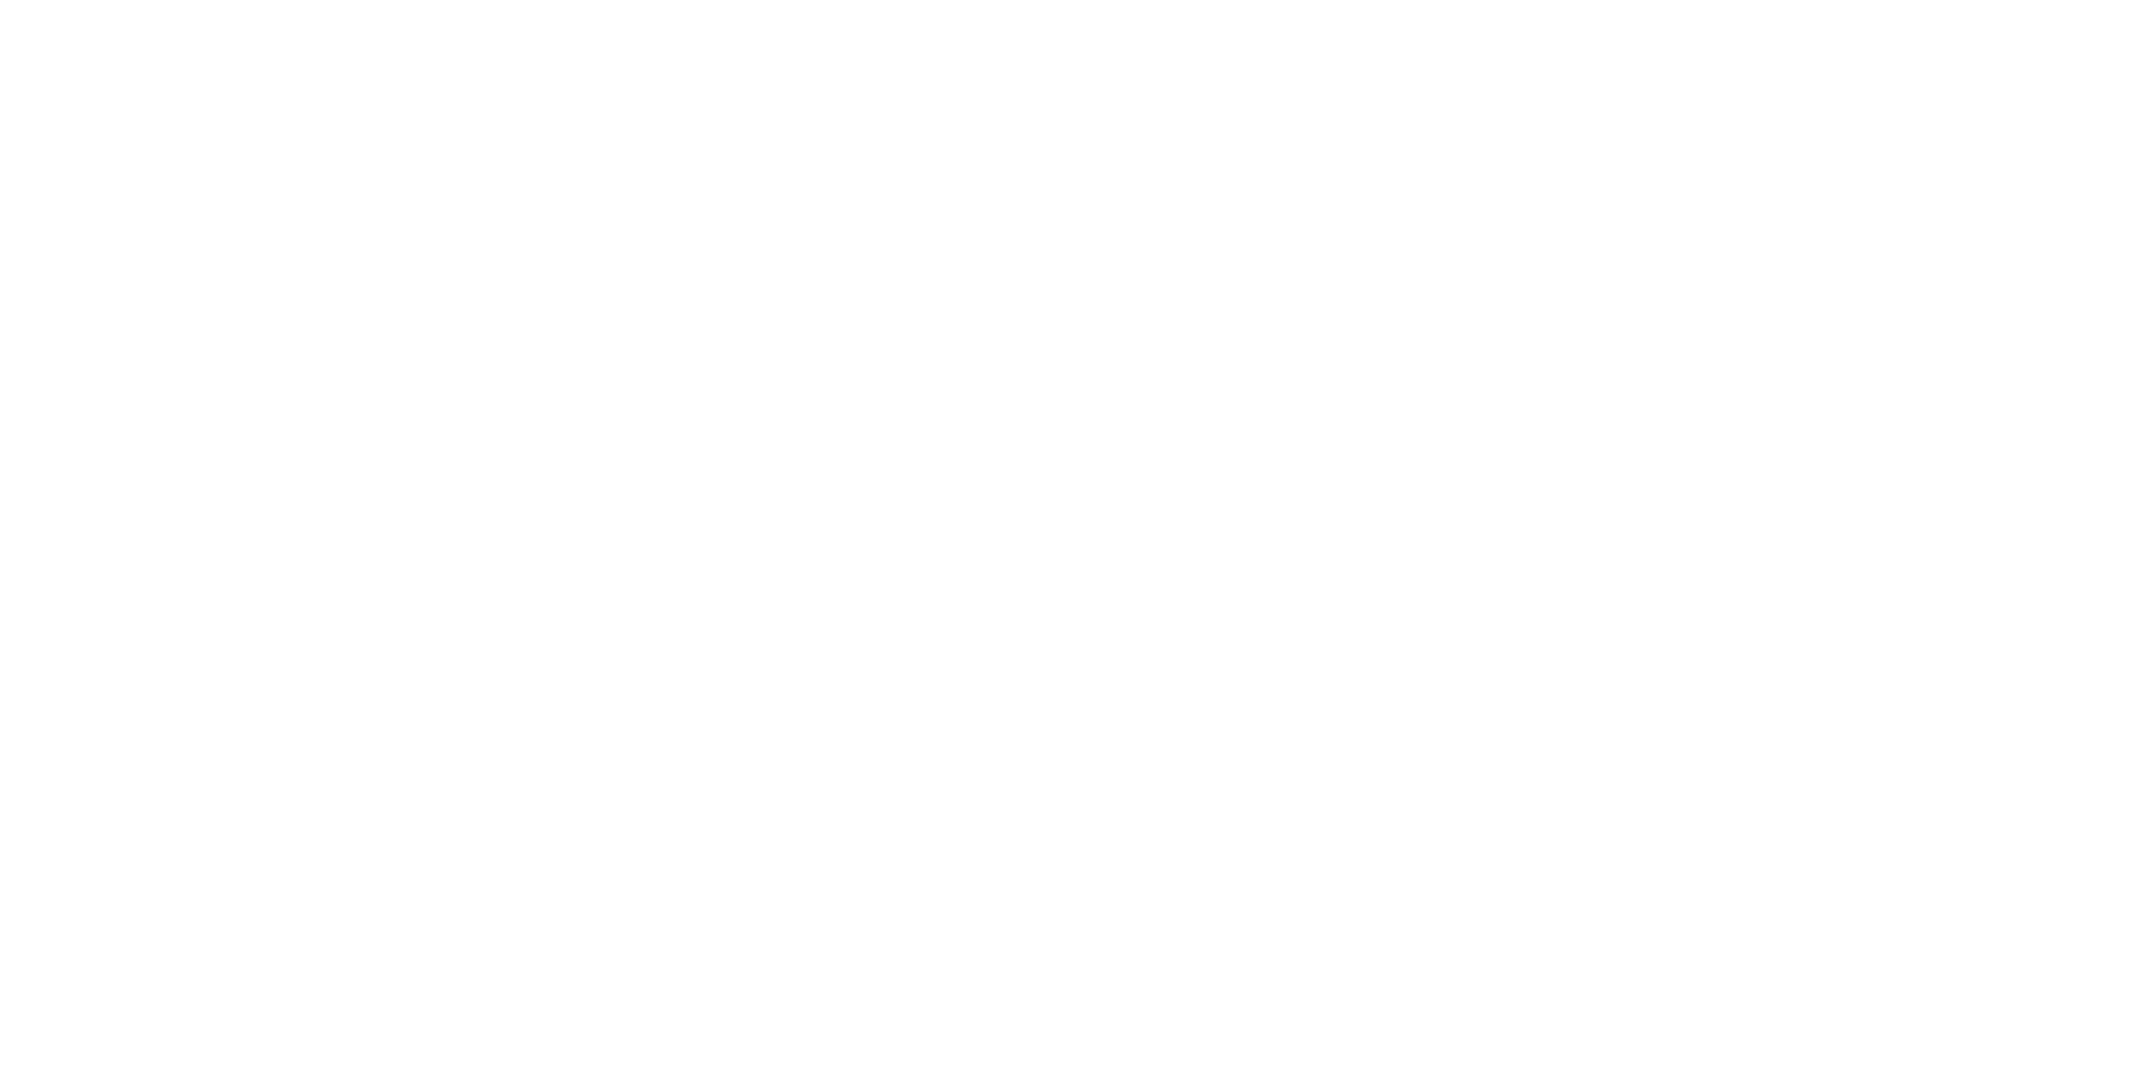 Dr AJ Dybala Law_Stacked logo_whitev2